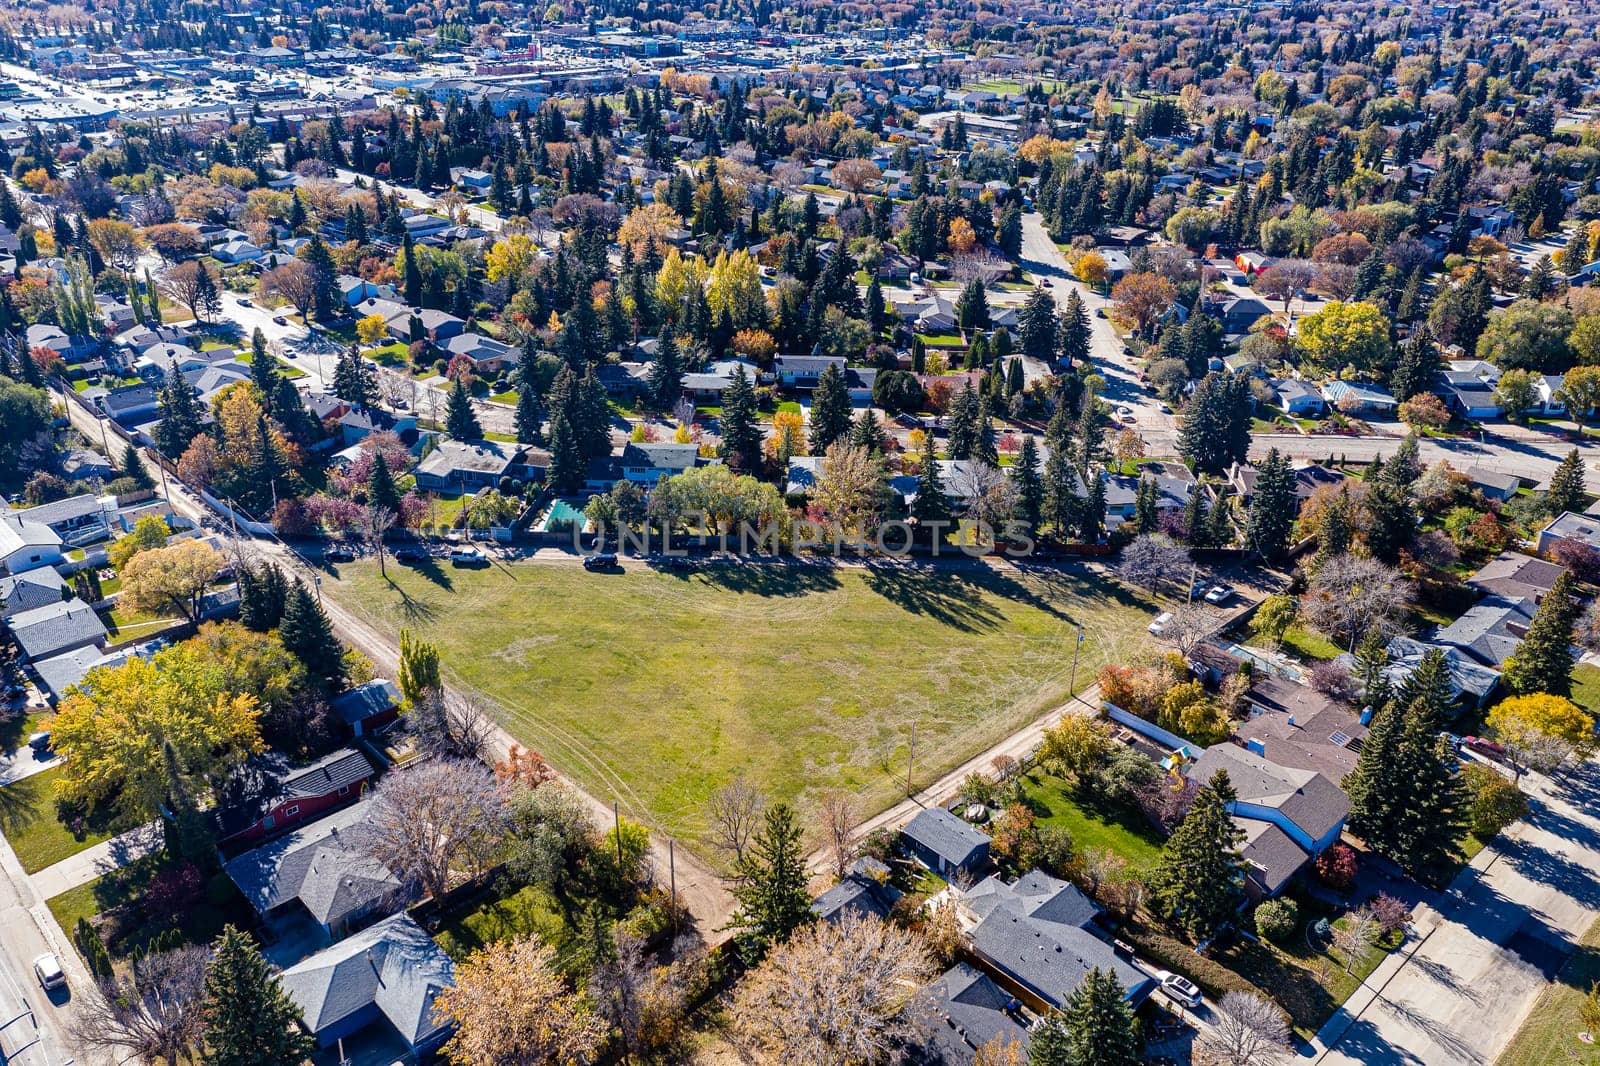 Rod V Real Park is located in the Grosvenor Park neighborhood of Saskatoon.